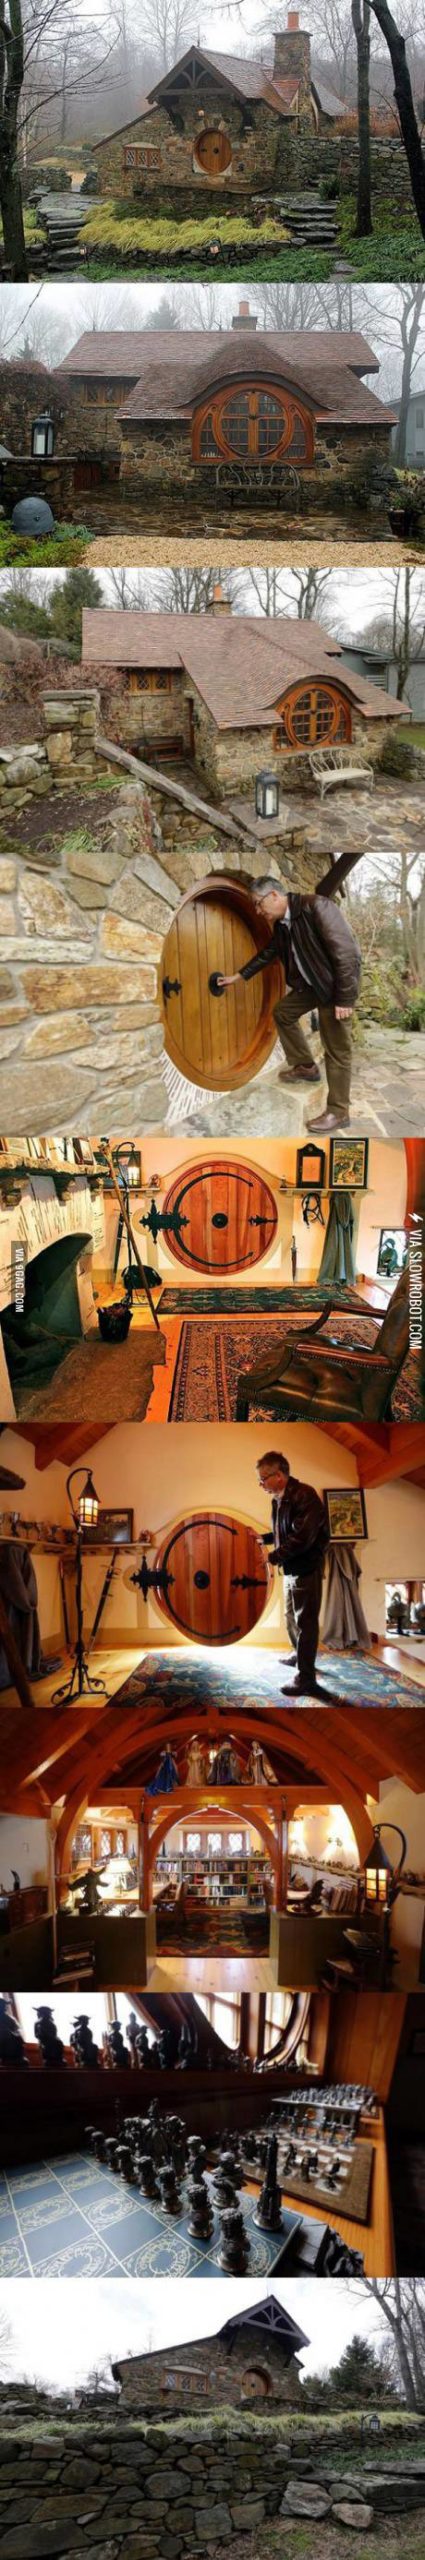 A+real+life+hobbit+home.